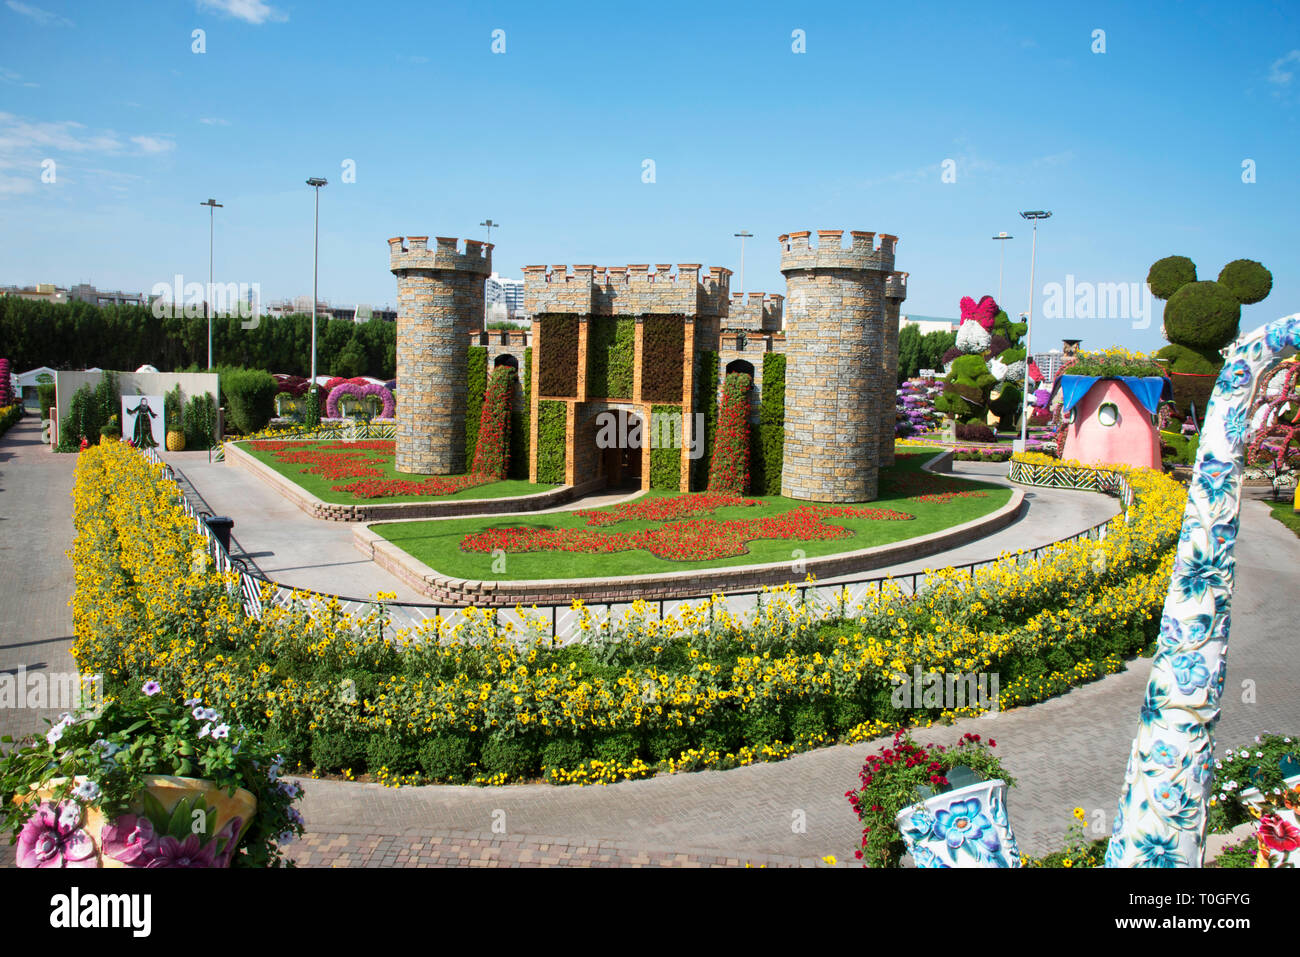 Replica of Disney Castle covered with flowers, Dubai Miracle Garden a flower garden, Dubailand, Dubai, United Arab Emirates. Stock Photo